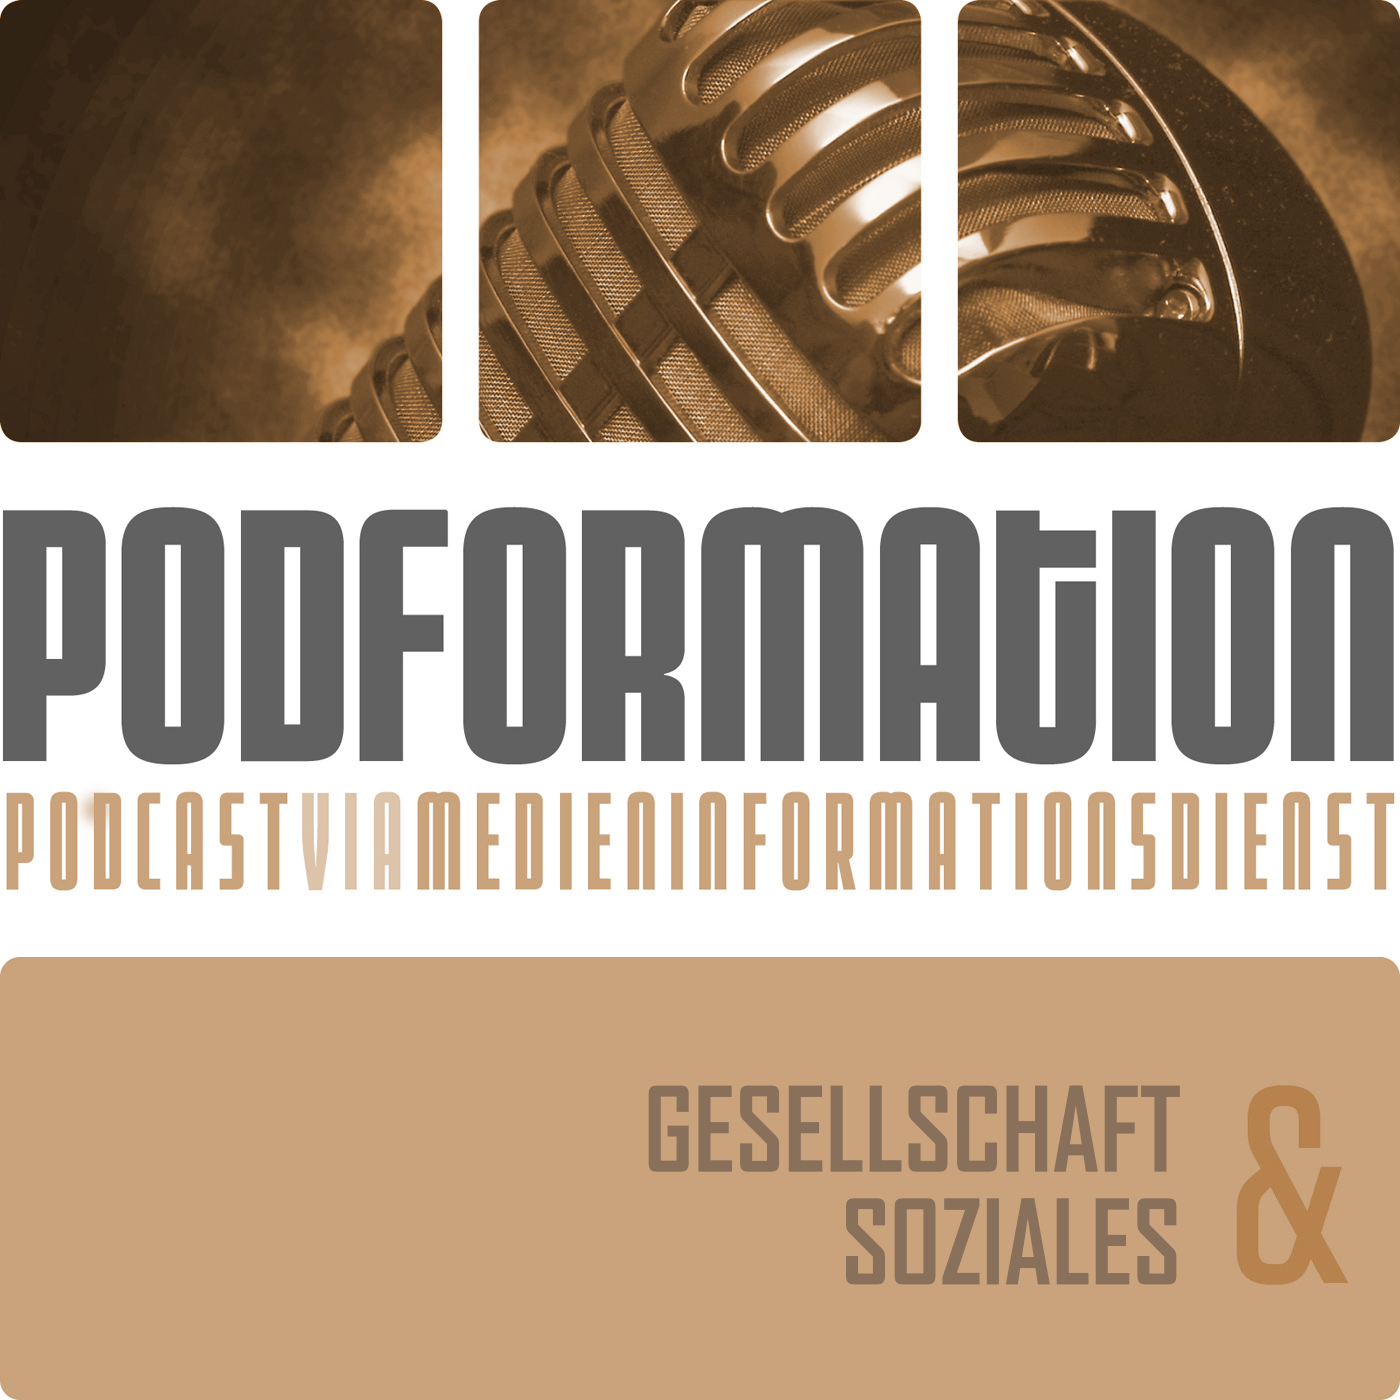 podformation - Gesellschaft & Soziales